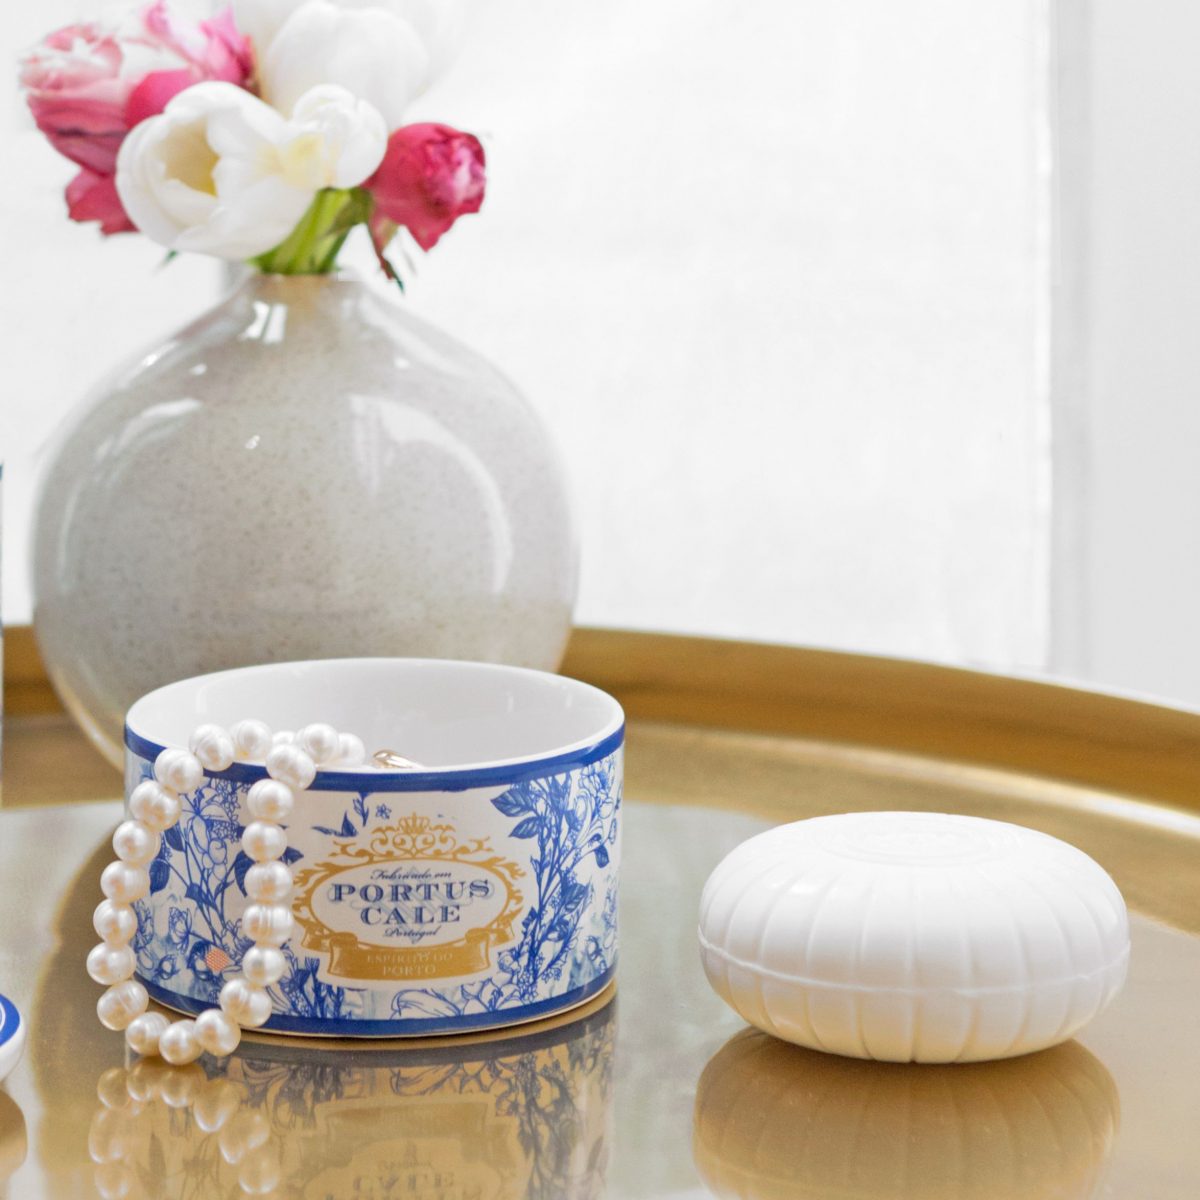 Portus Cale Gold &amp; Blue Aromatic Soap with Ceramic Dish | Bookazine HK